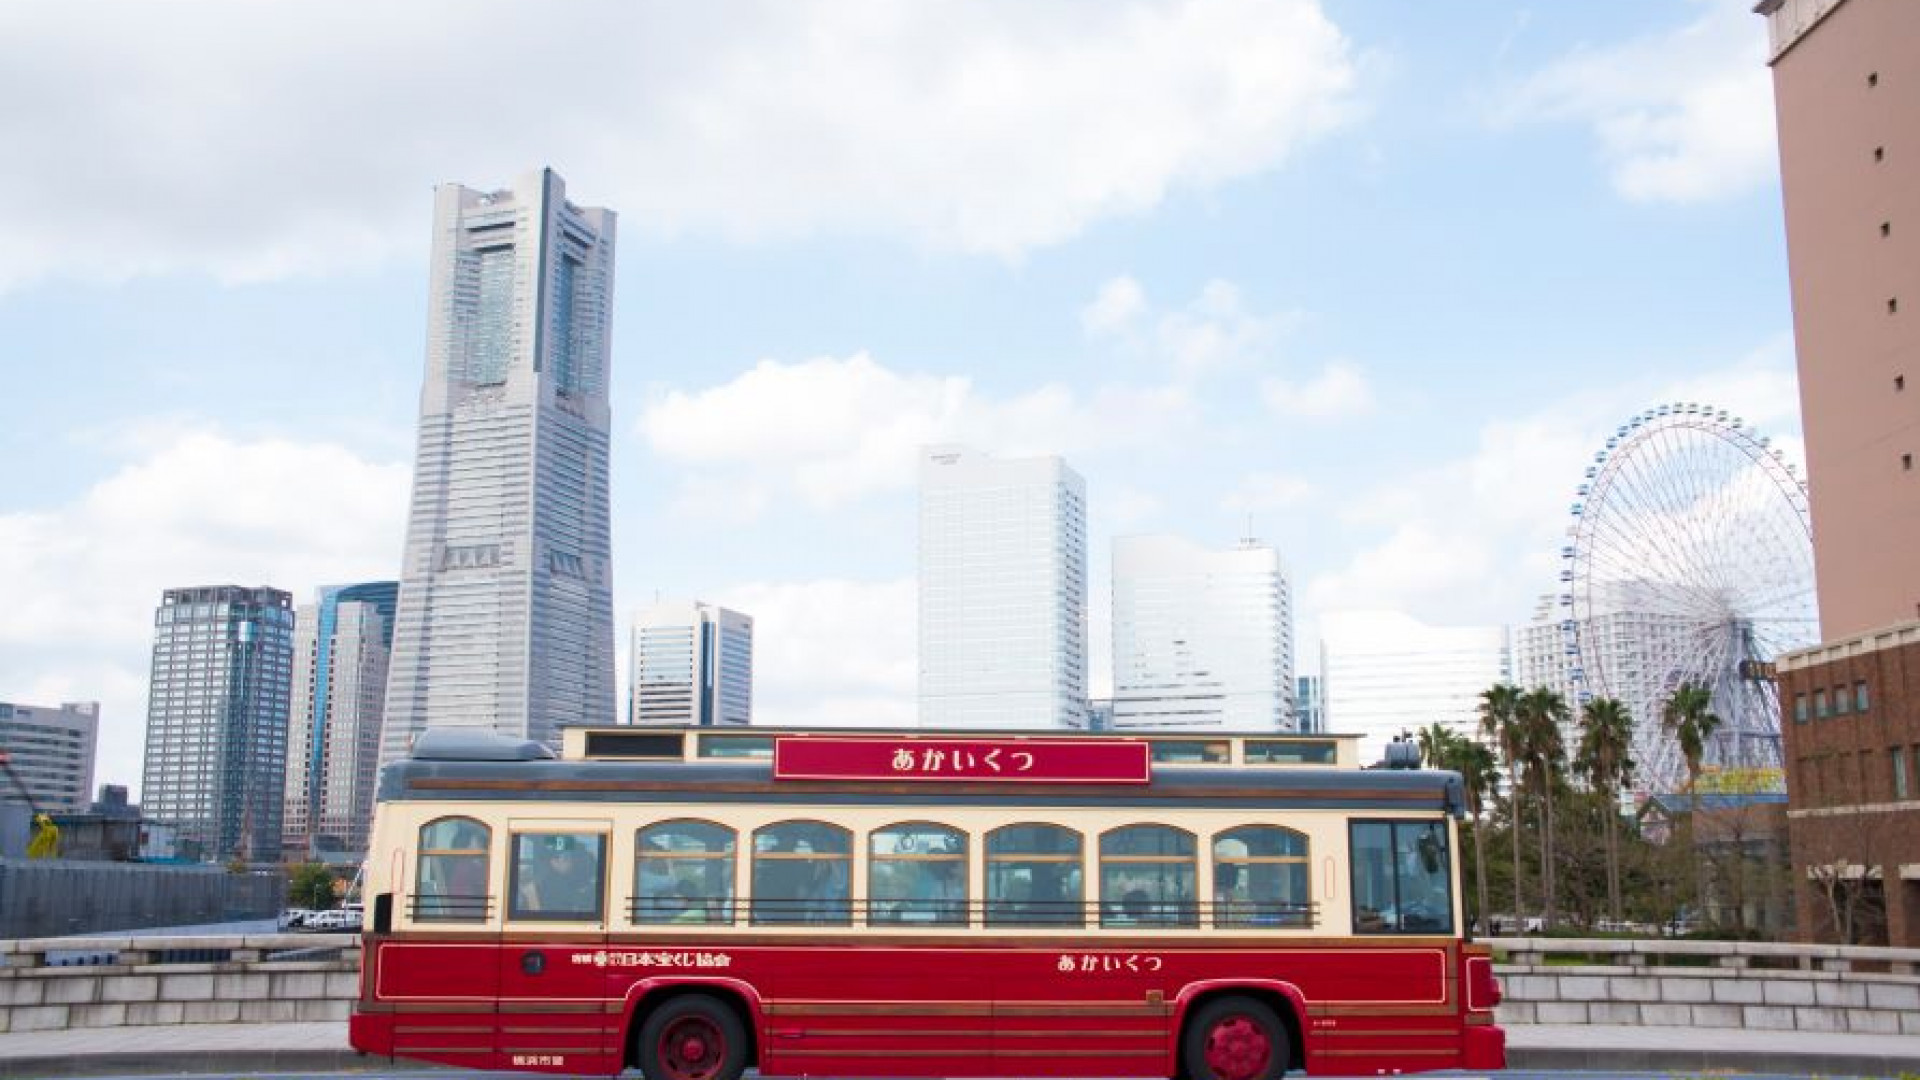 Explore Tourist Spots on the Retro-Styled "Akai Kutsu" Bus